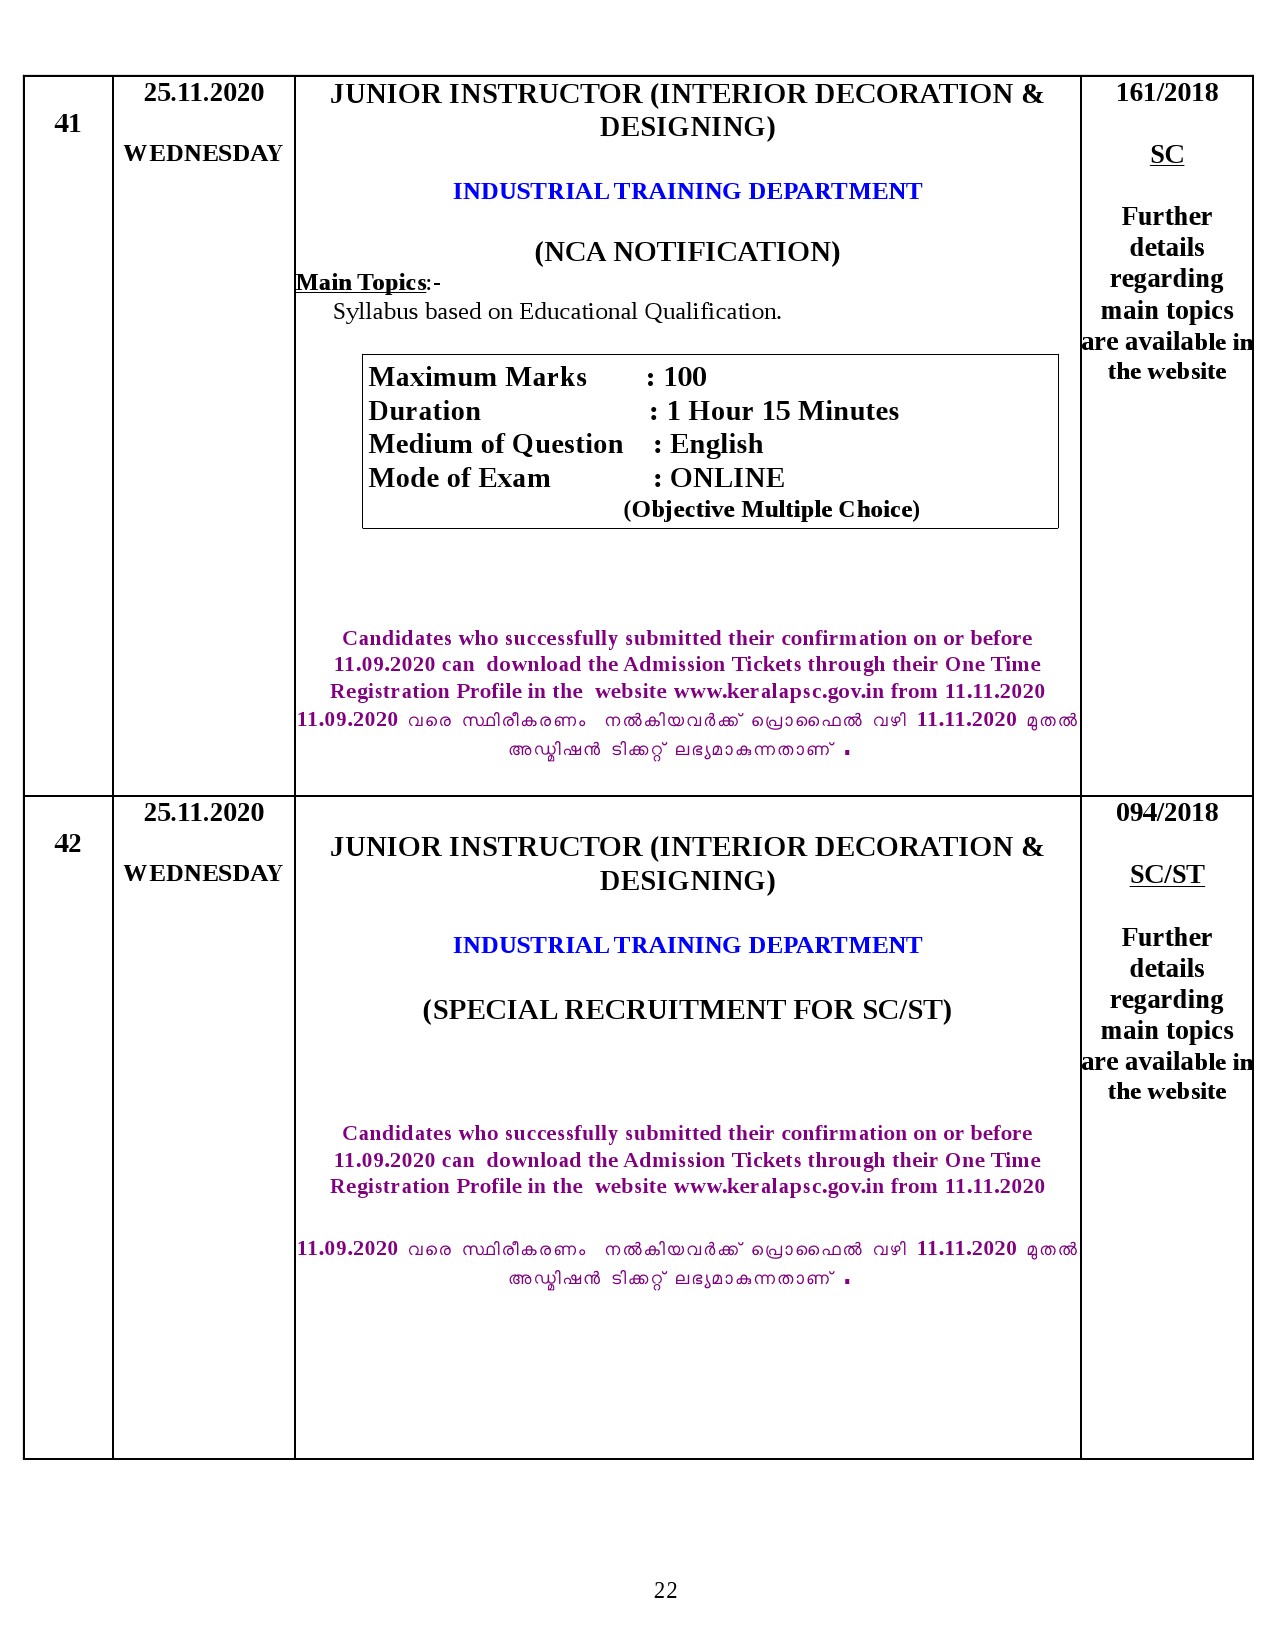 Kerala PSC Final Exam Schedule for November 2020 - Notification Image 22